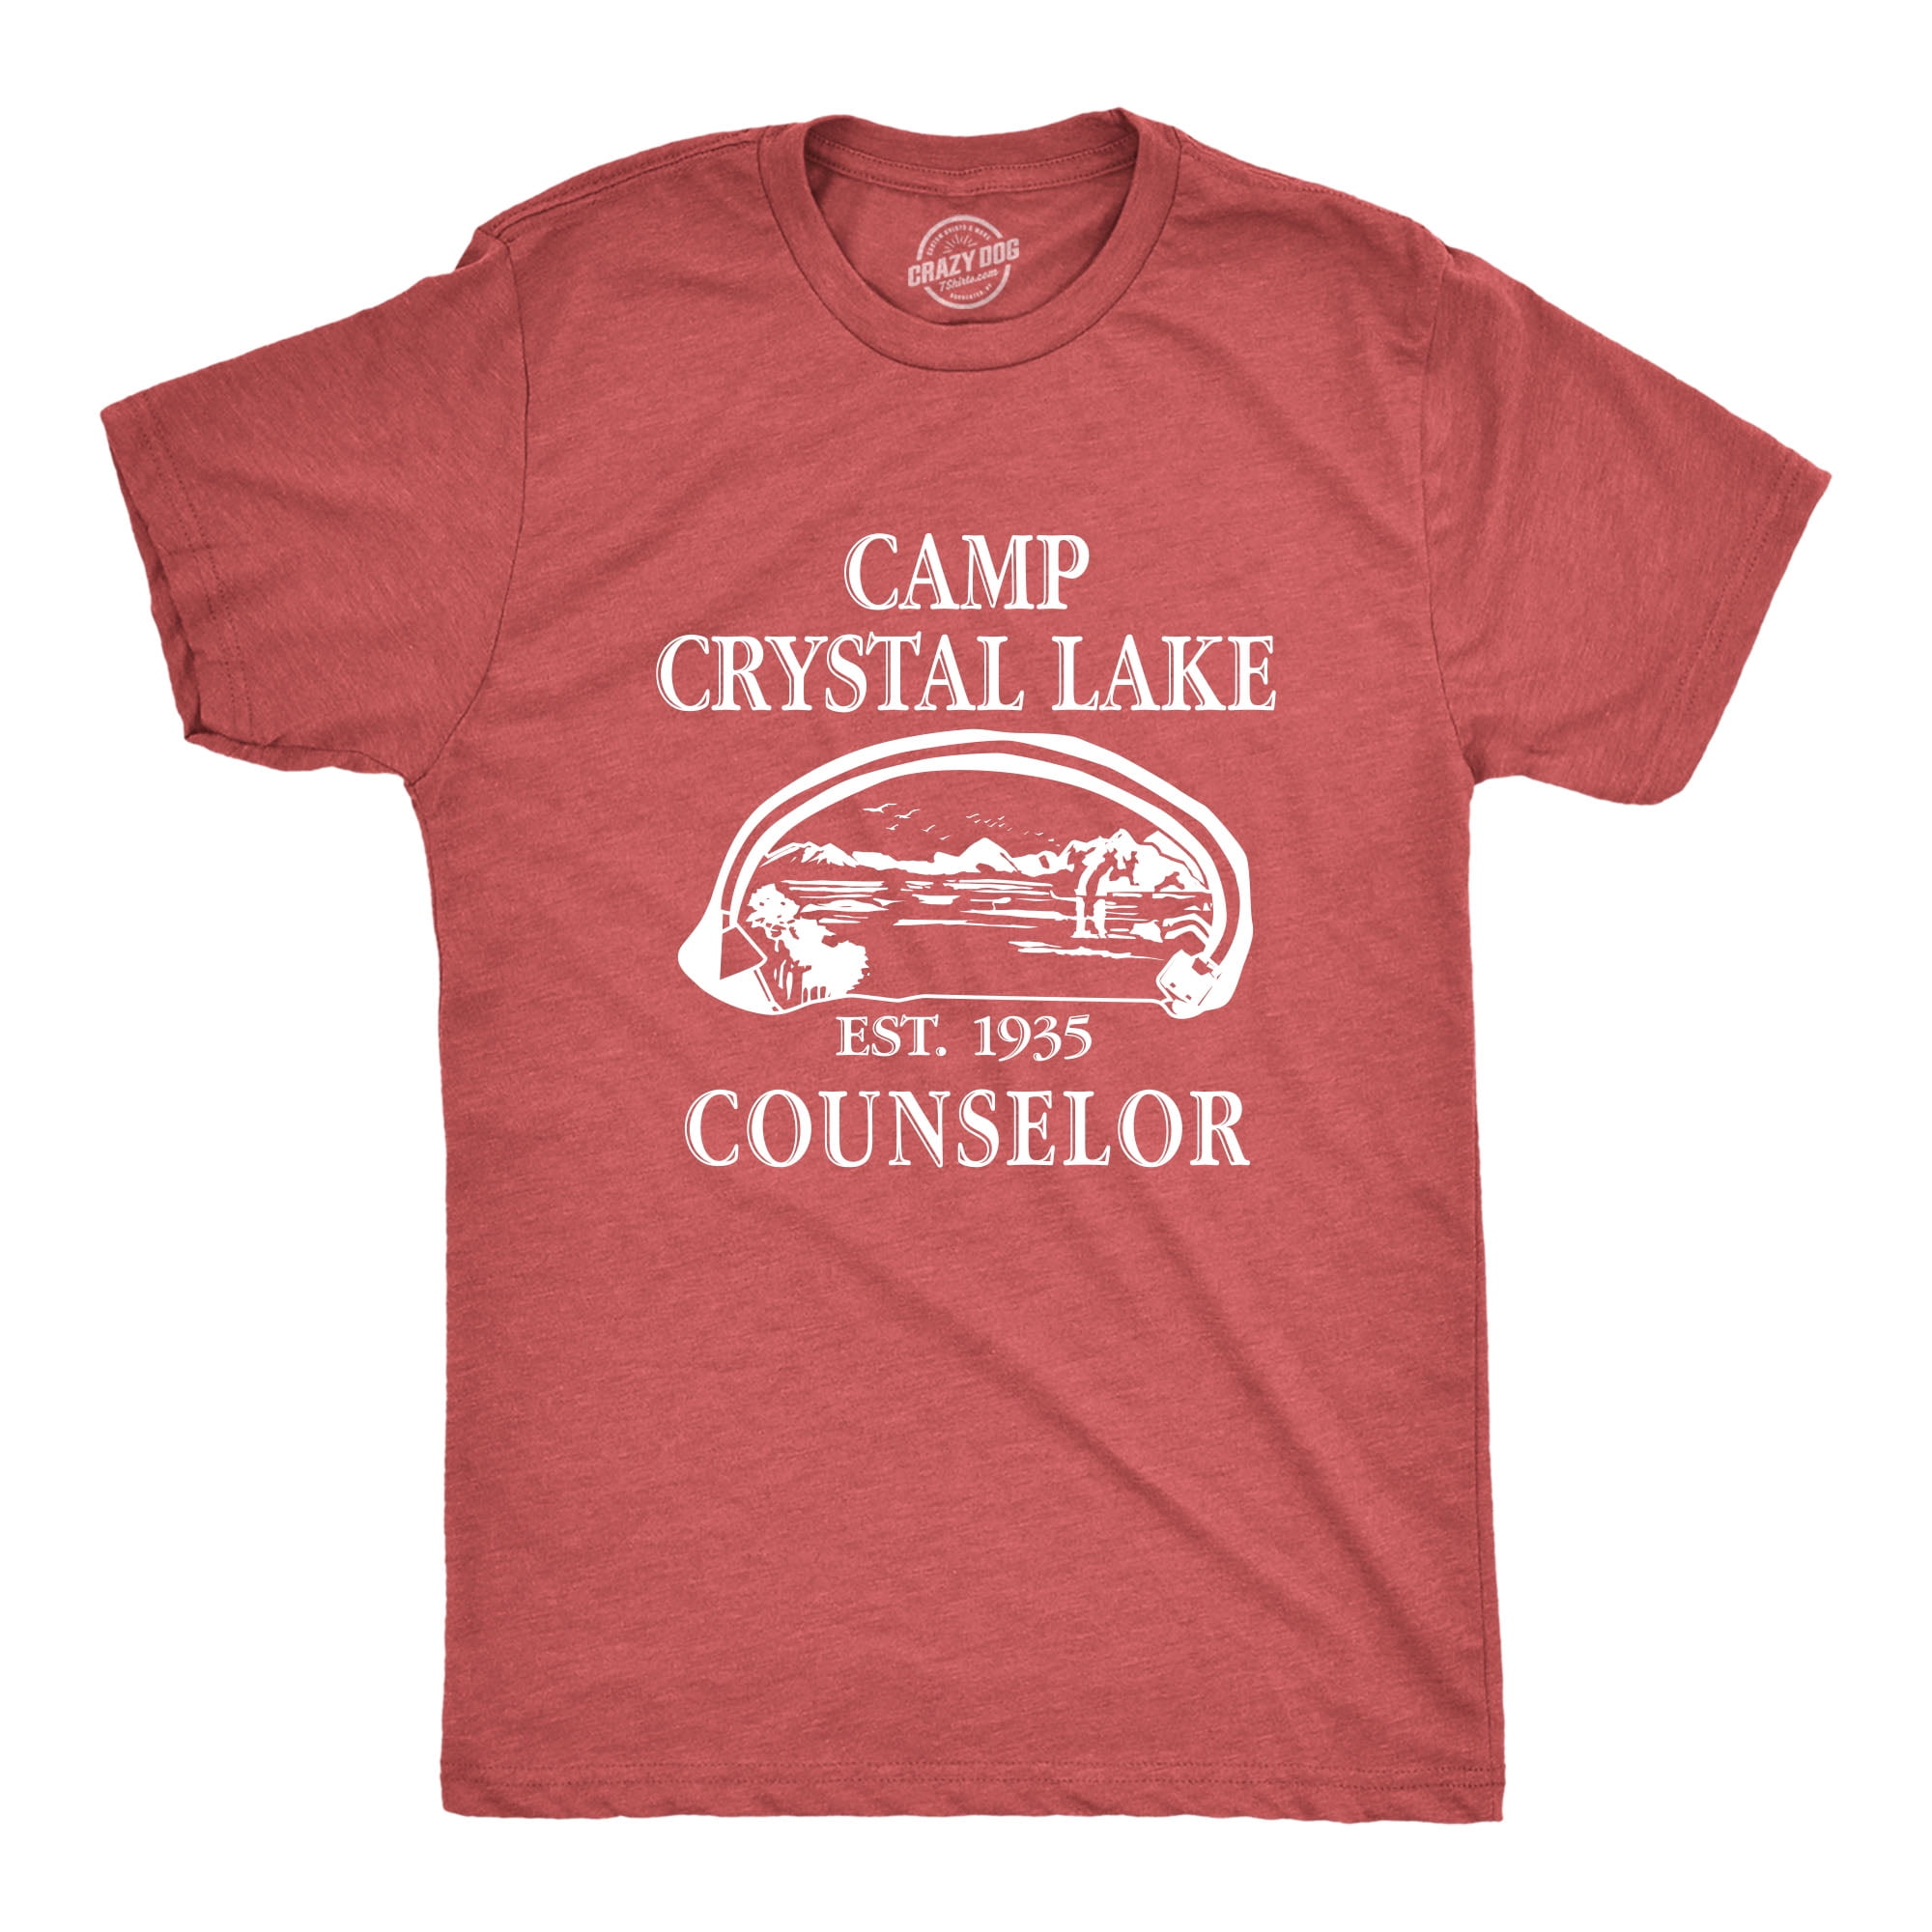 Mens Camp Crystal Lake T shirt Funny Graphic Camping Vintage Adult Novelty  Tees Graphic Tees 